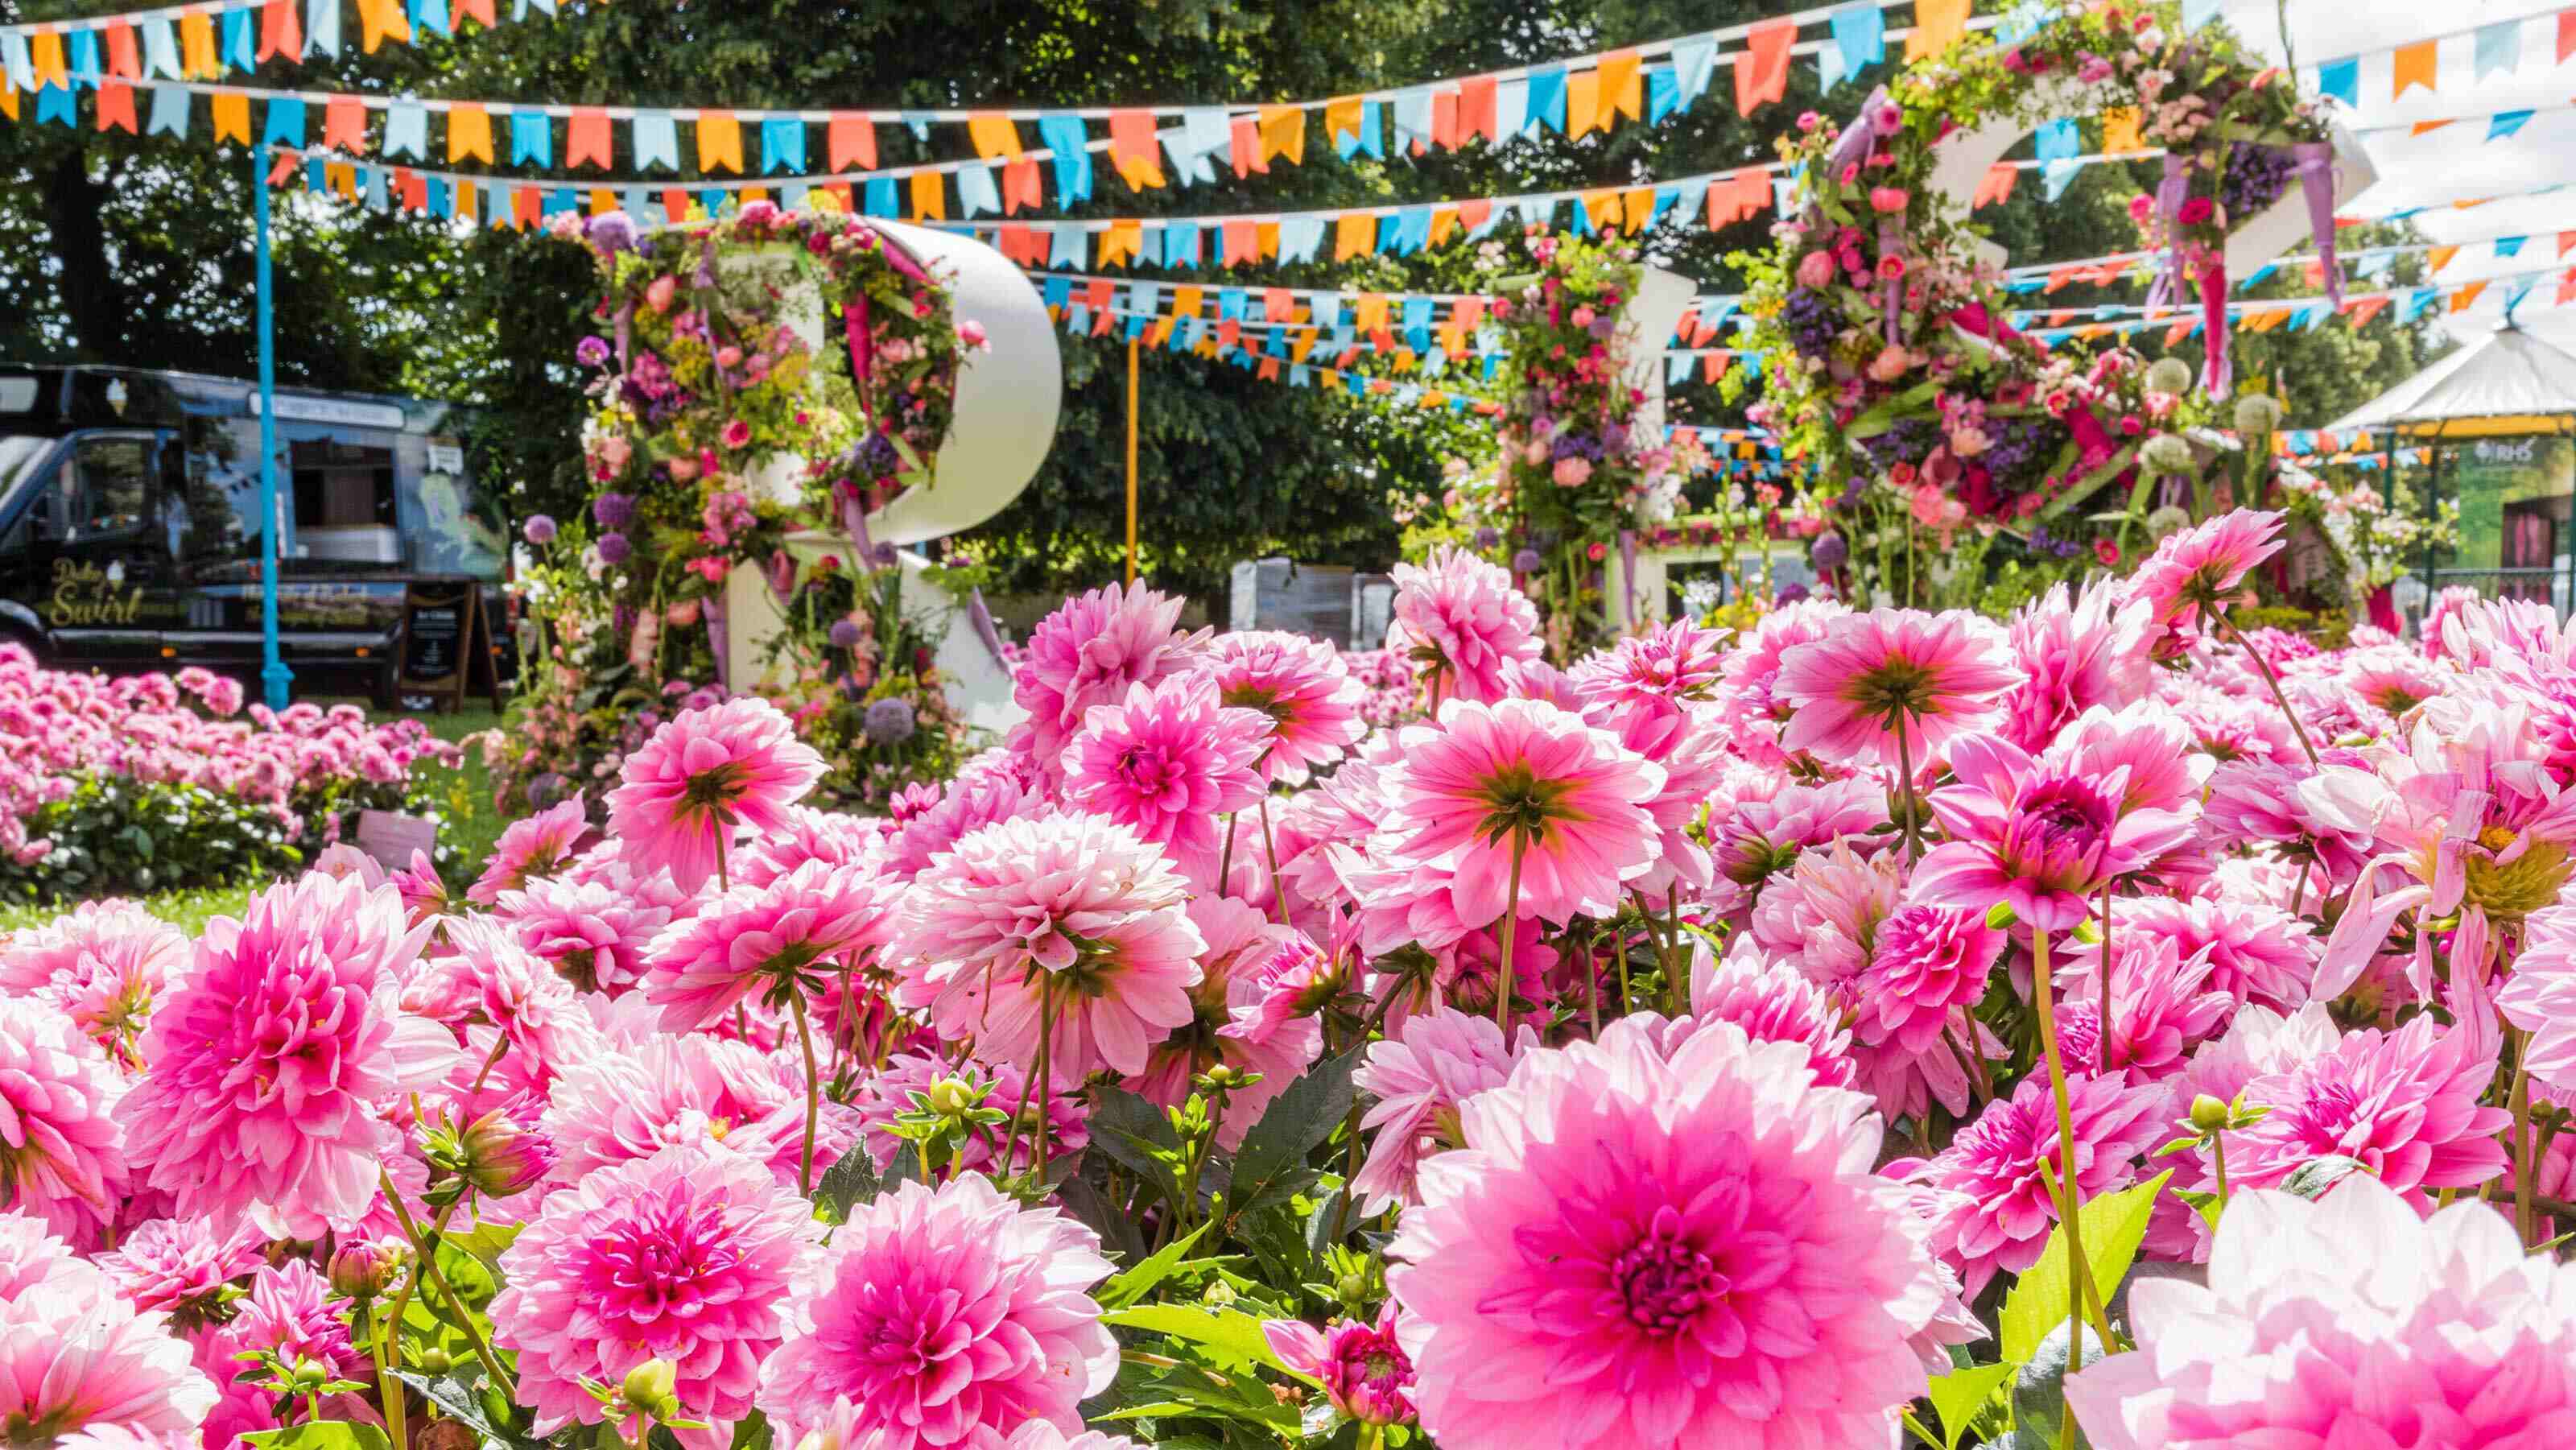 20 Facts About Hampton Court Palace Flower Show